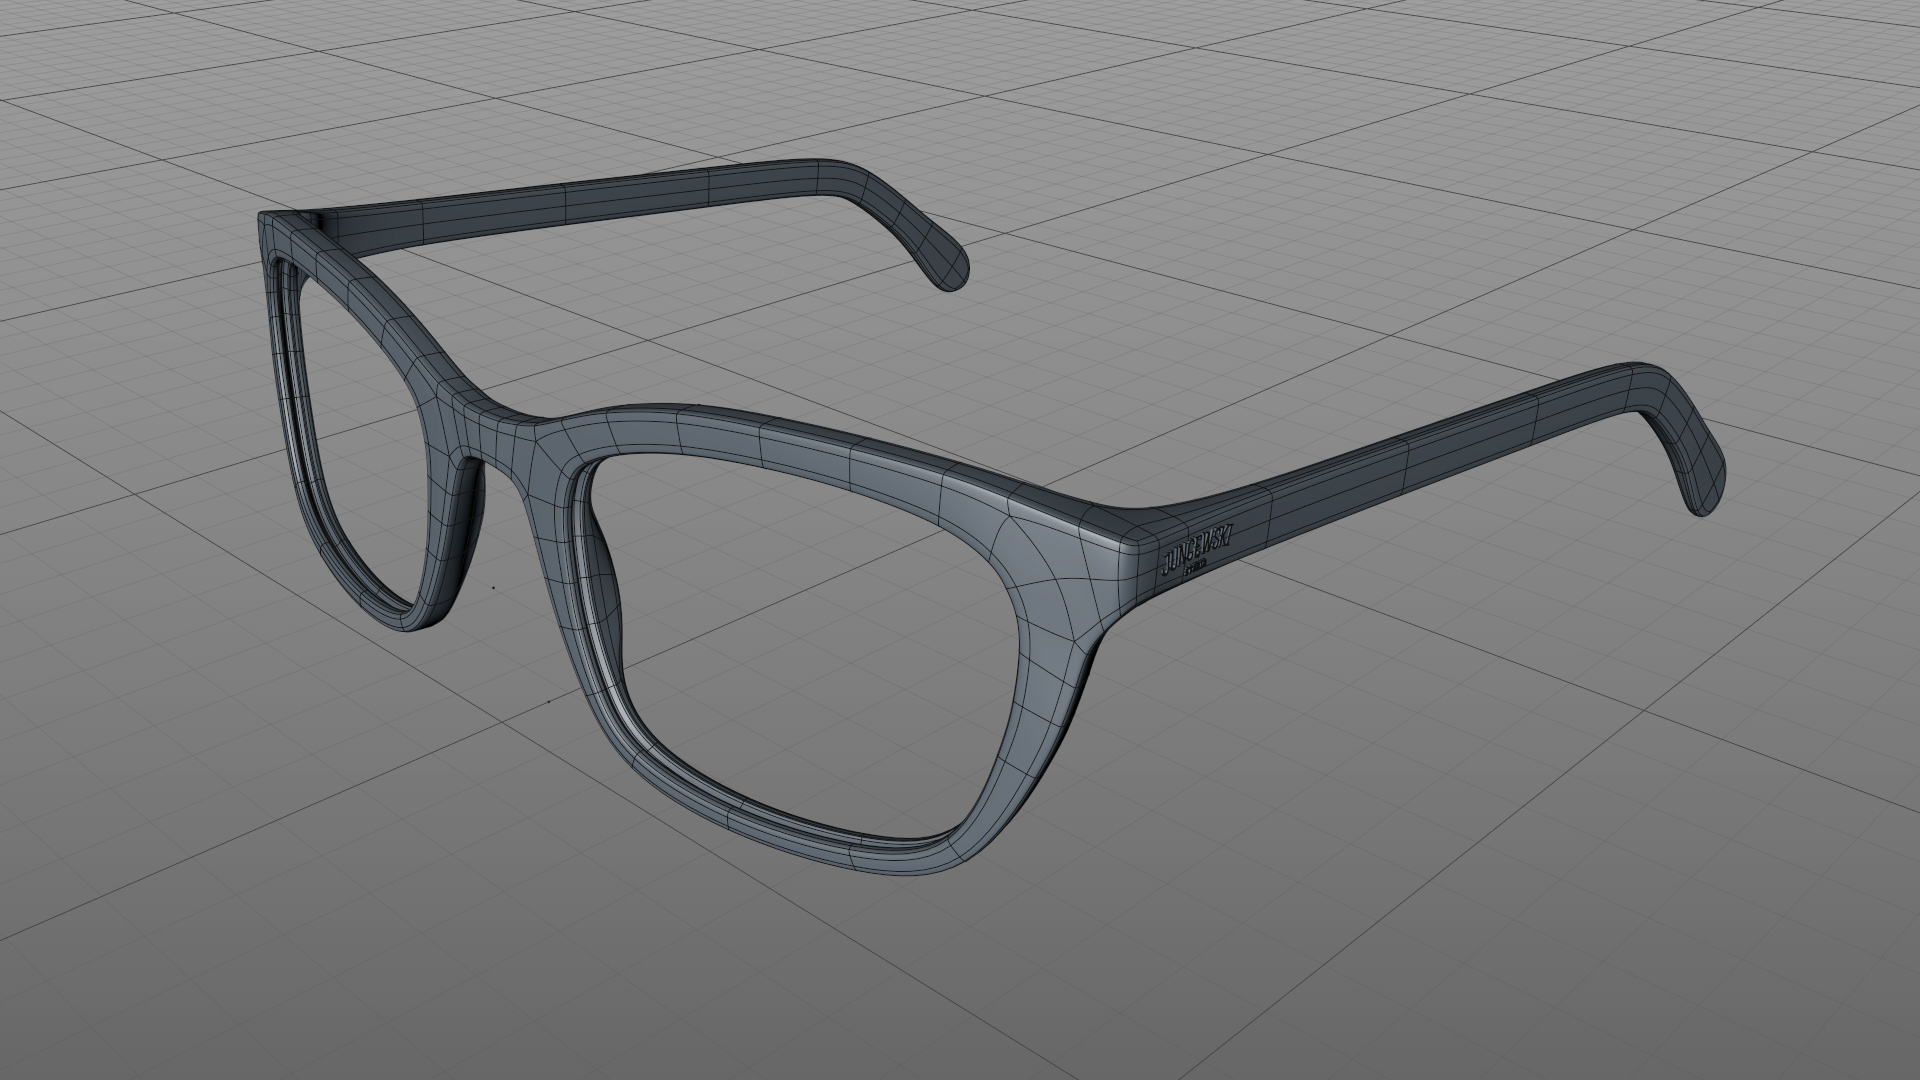 3D Printed Sunglasses